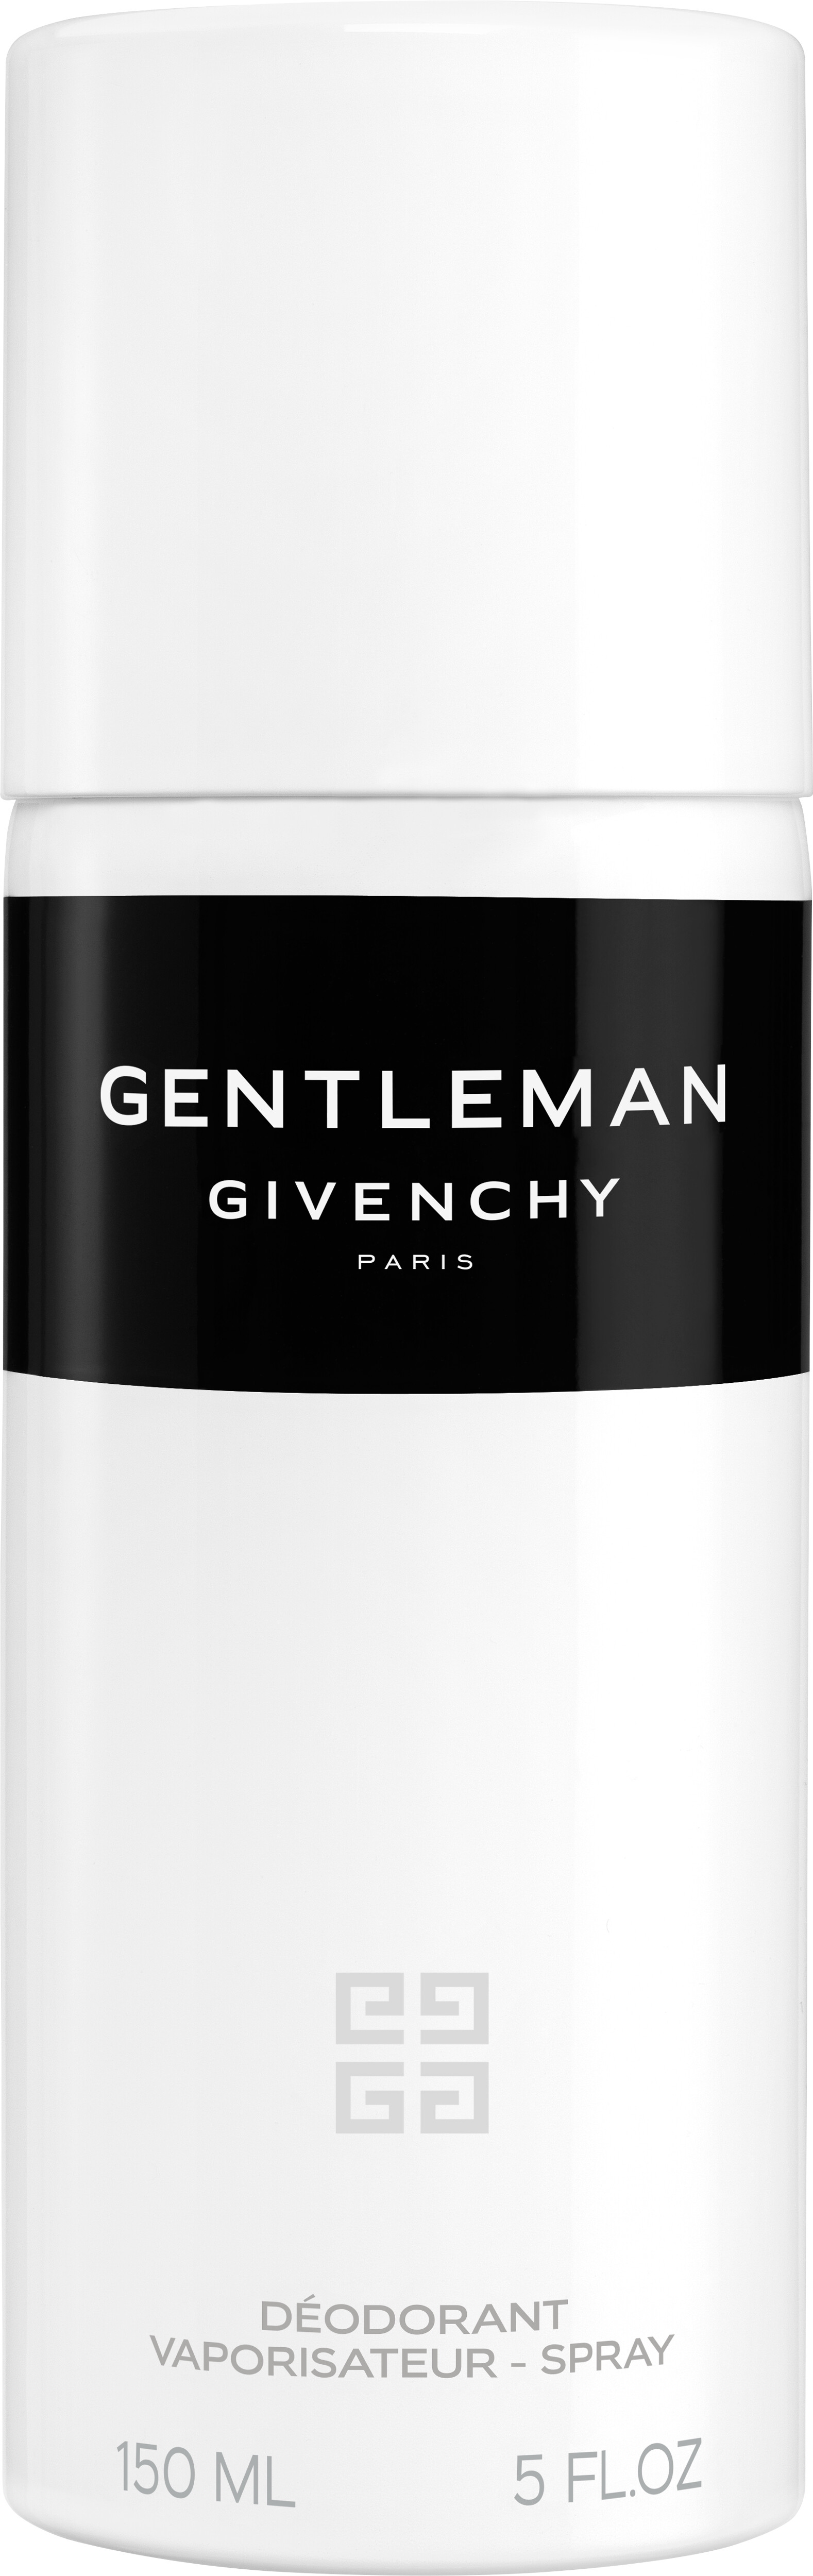 GIVENCHY Gentleman Deodorant Spray